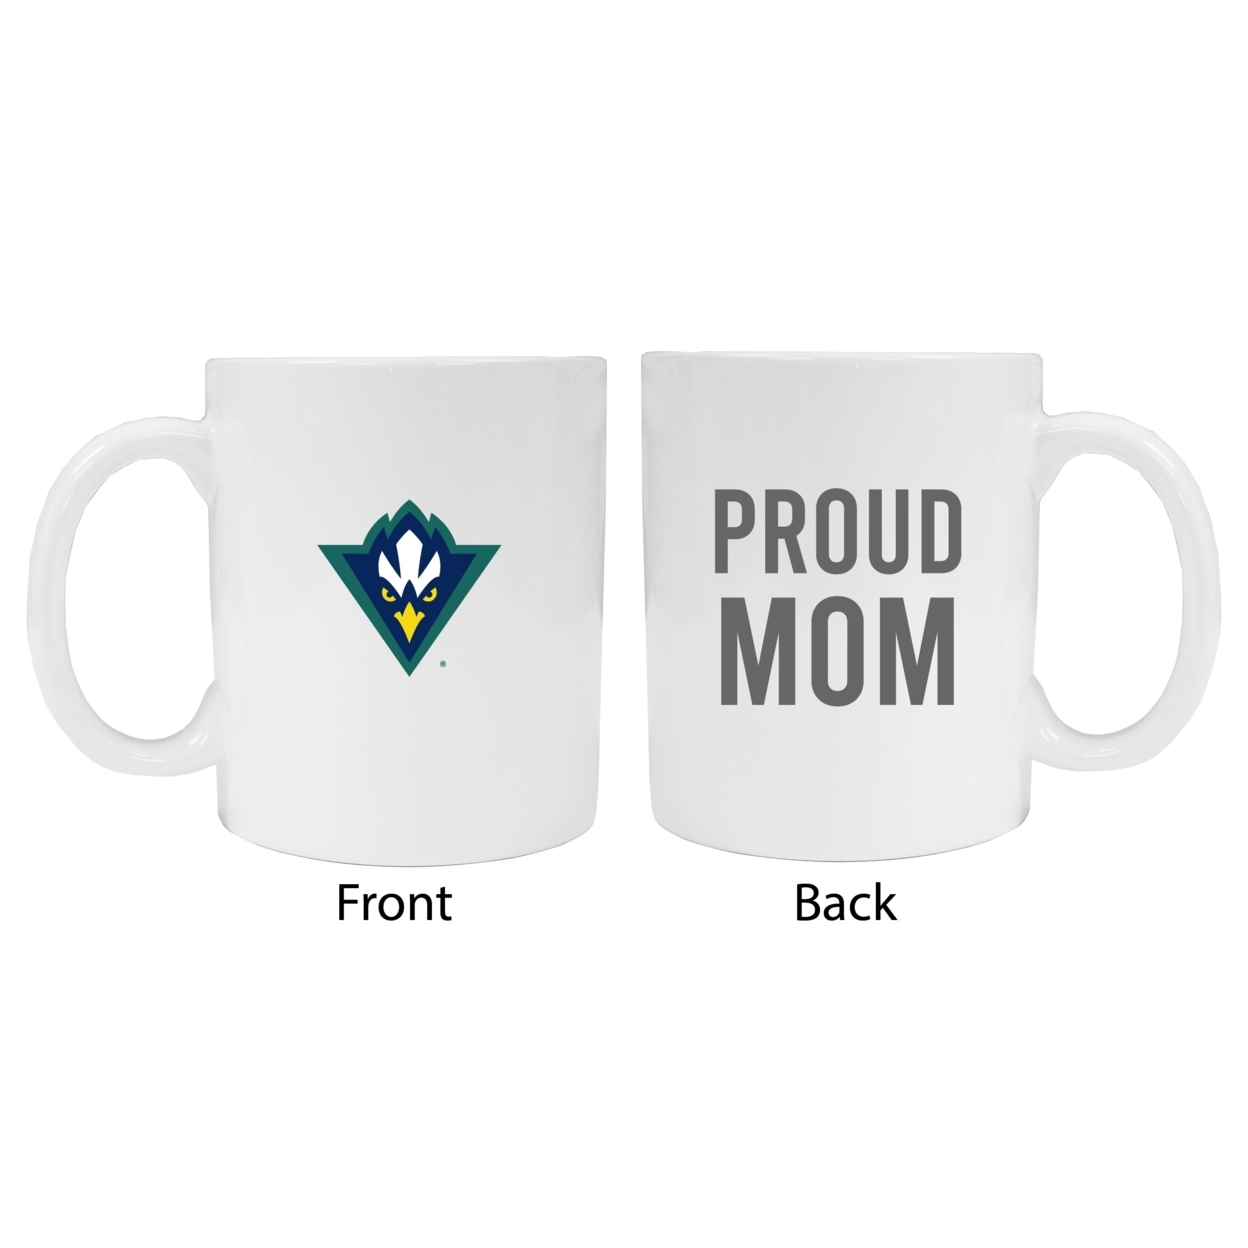 North Carolina Wilmington Seahawks Proud Mom Ceramic Coffee Mug - White (2 Pack)